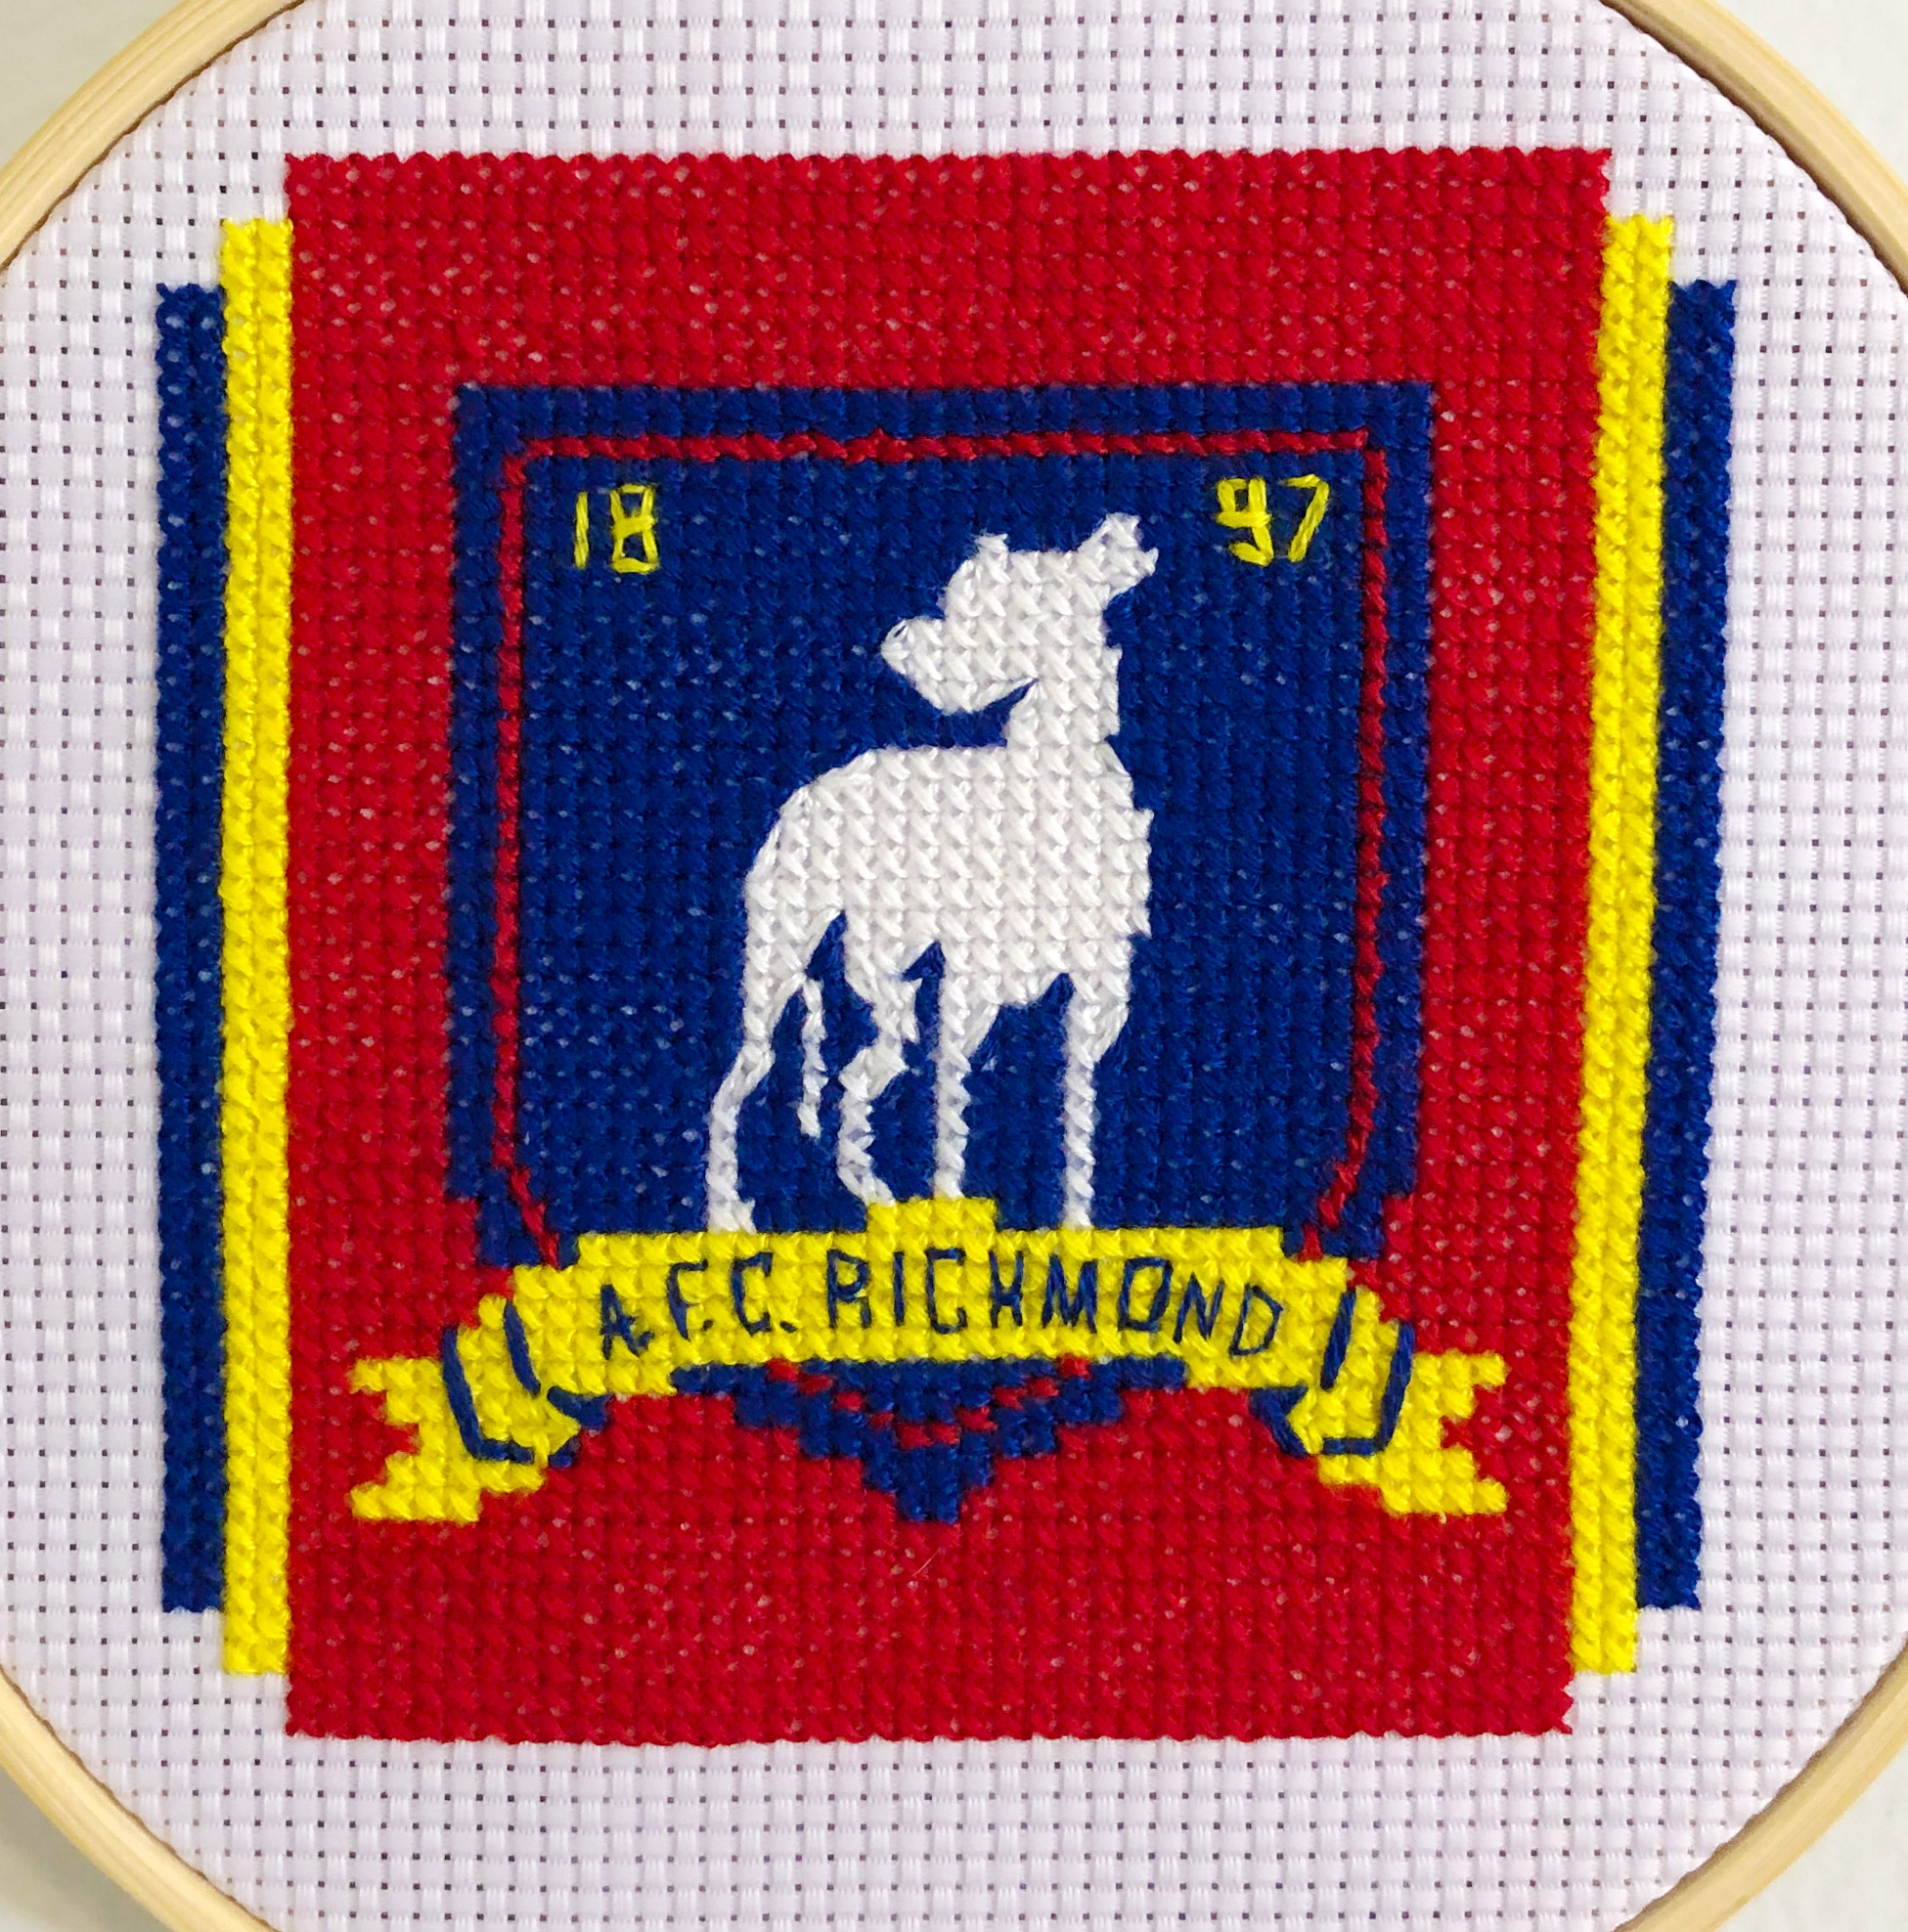 A cross stitched AFC Richmond crest